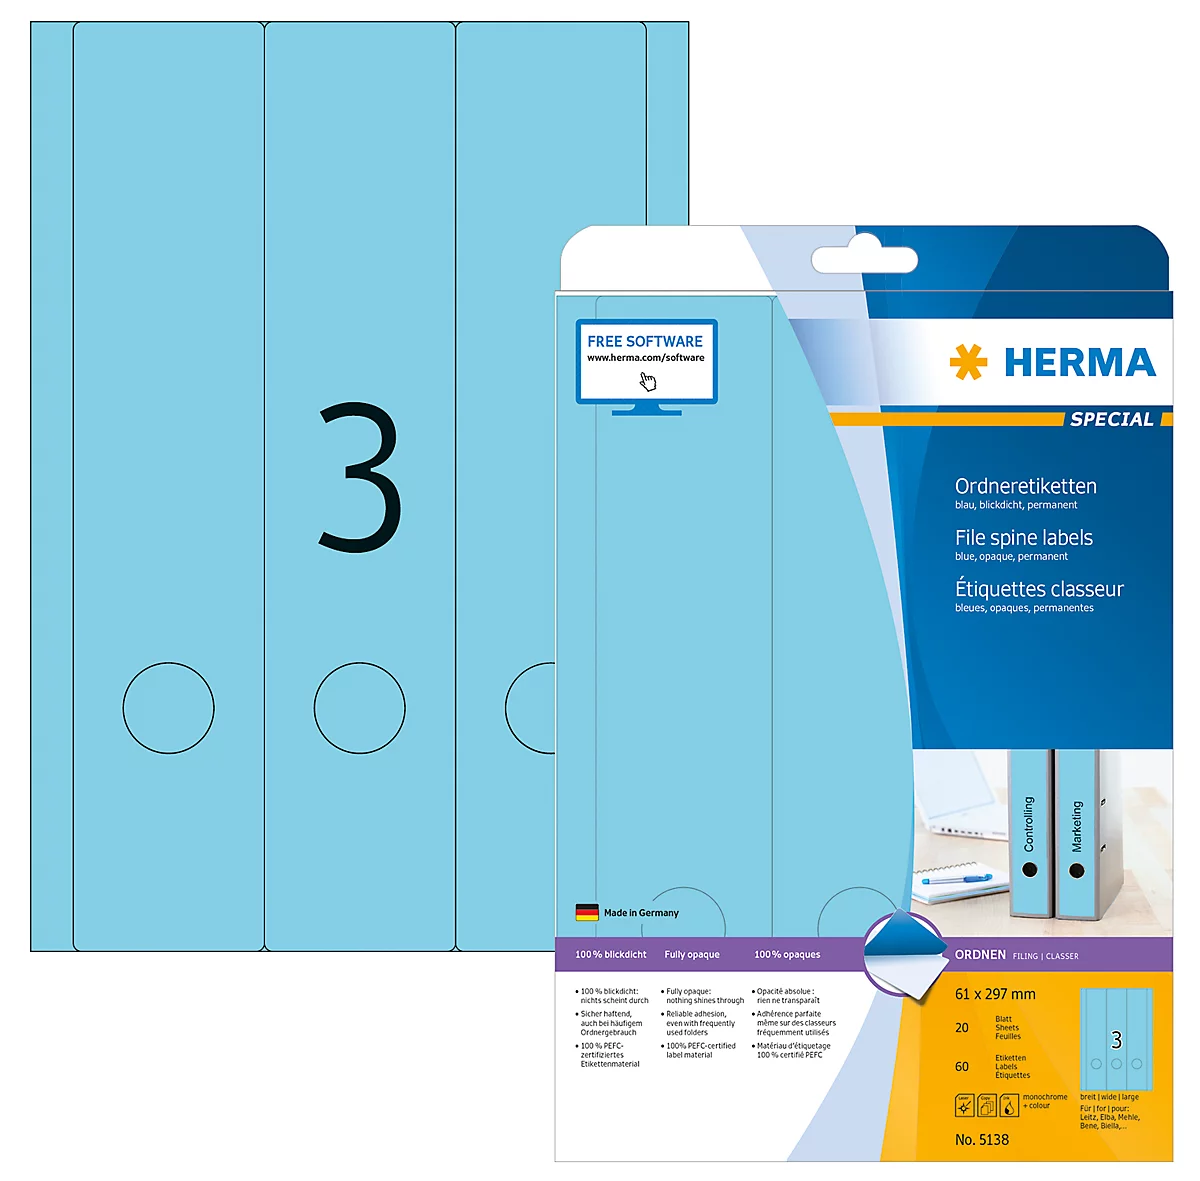 Herma Ordneretiketten A4, 297 x 61 mm, permanent haftend/bedruckbar, 60 Stück, blau